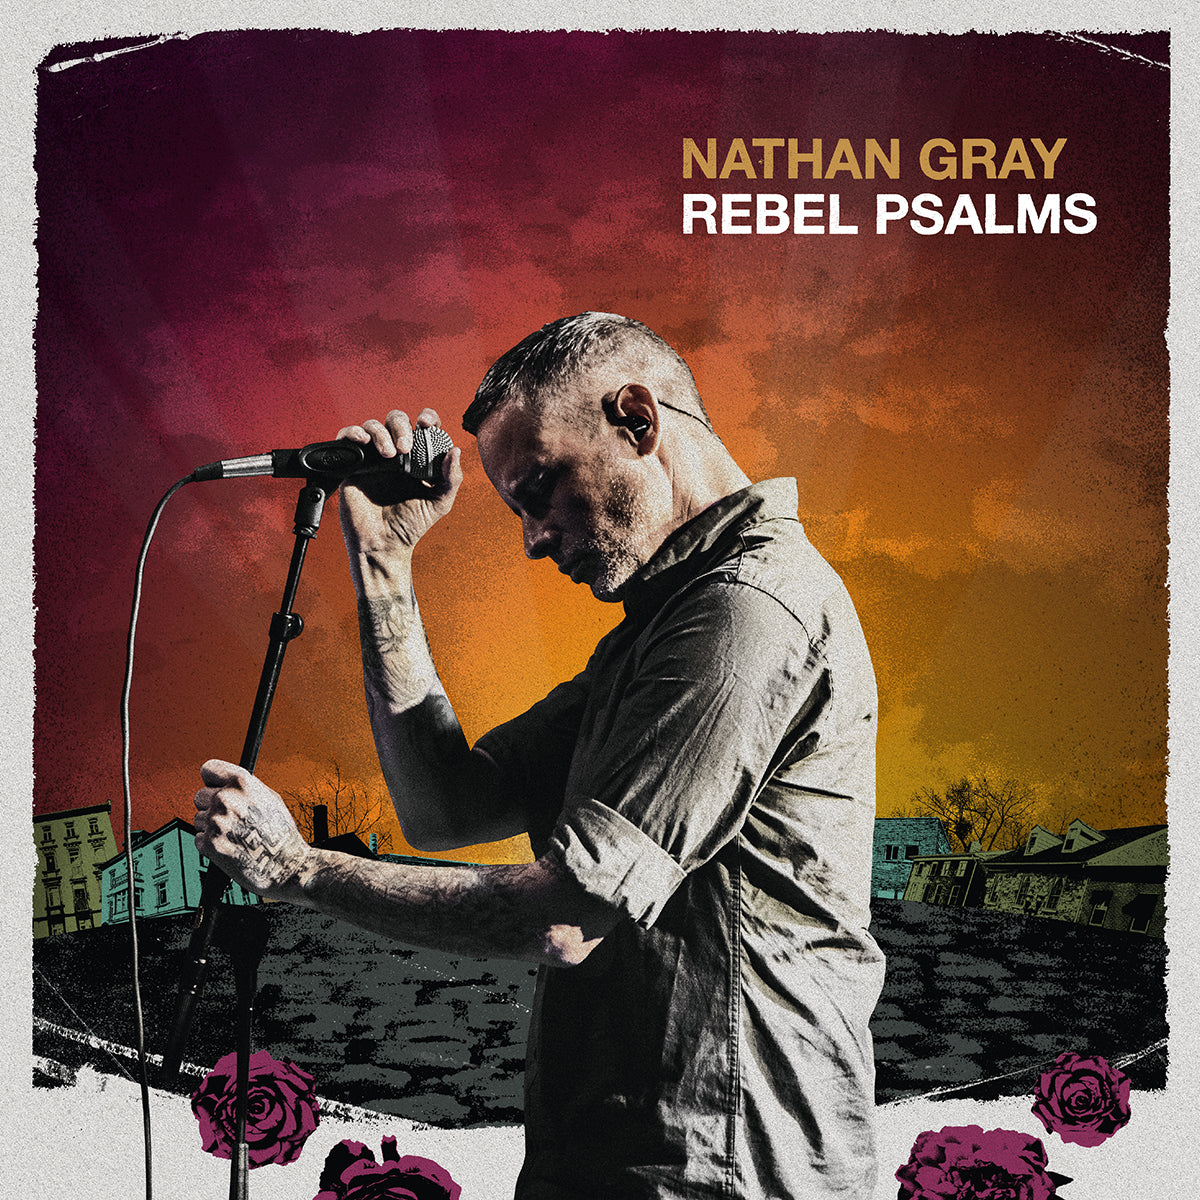 NATHAN GRAY "Rebel Psalms" LP